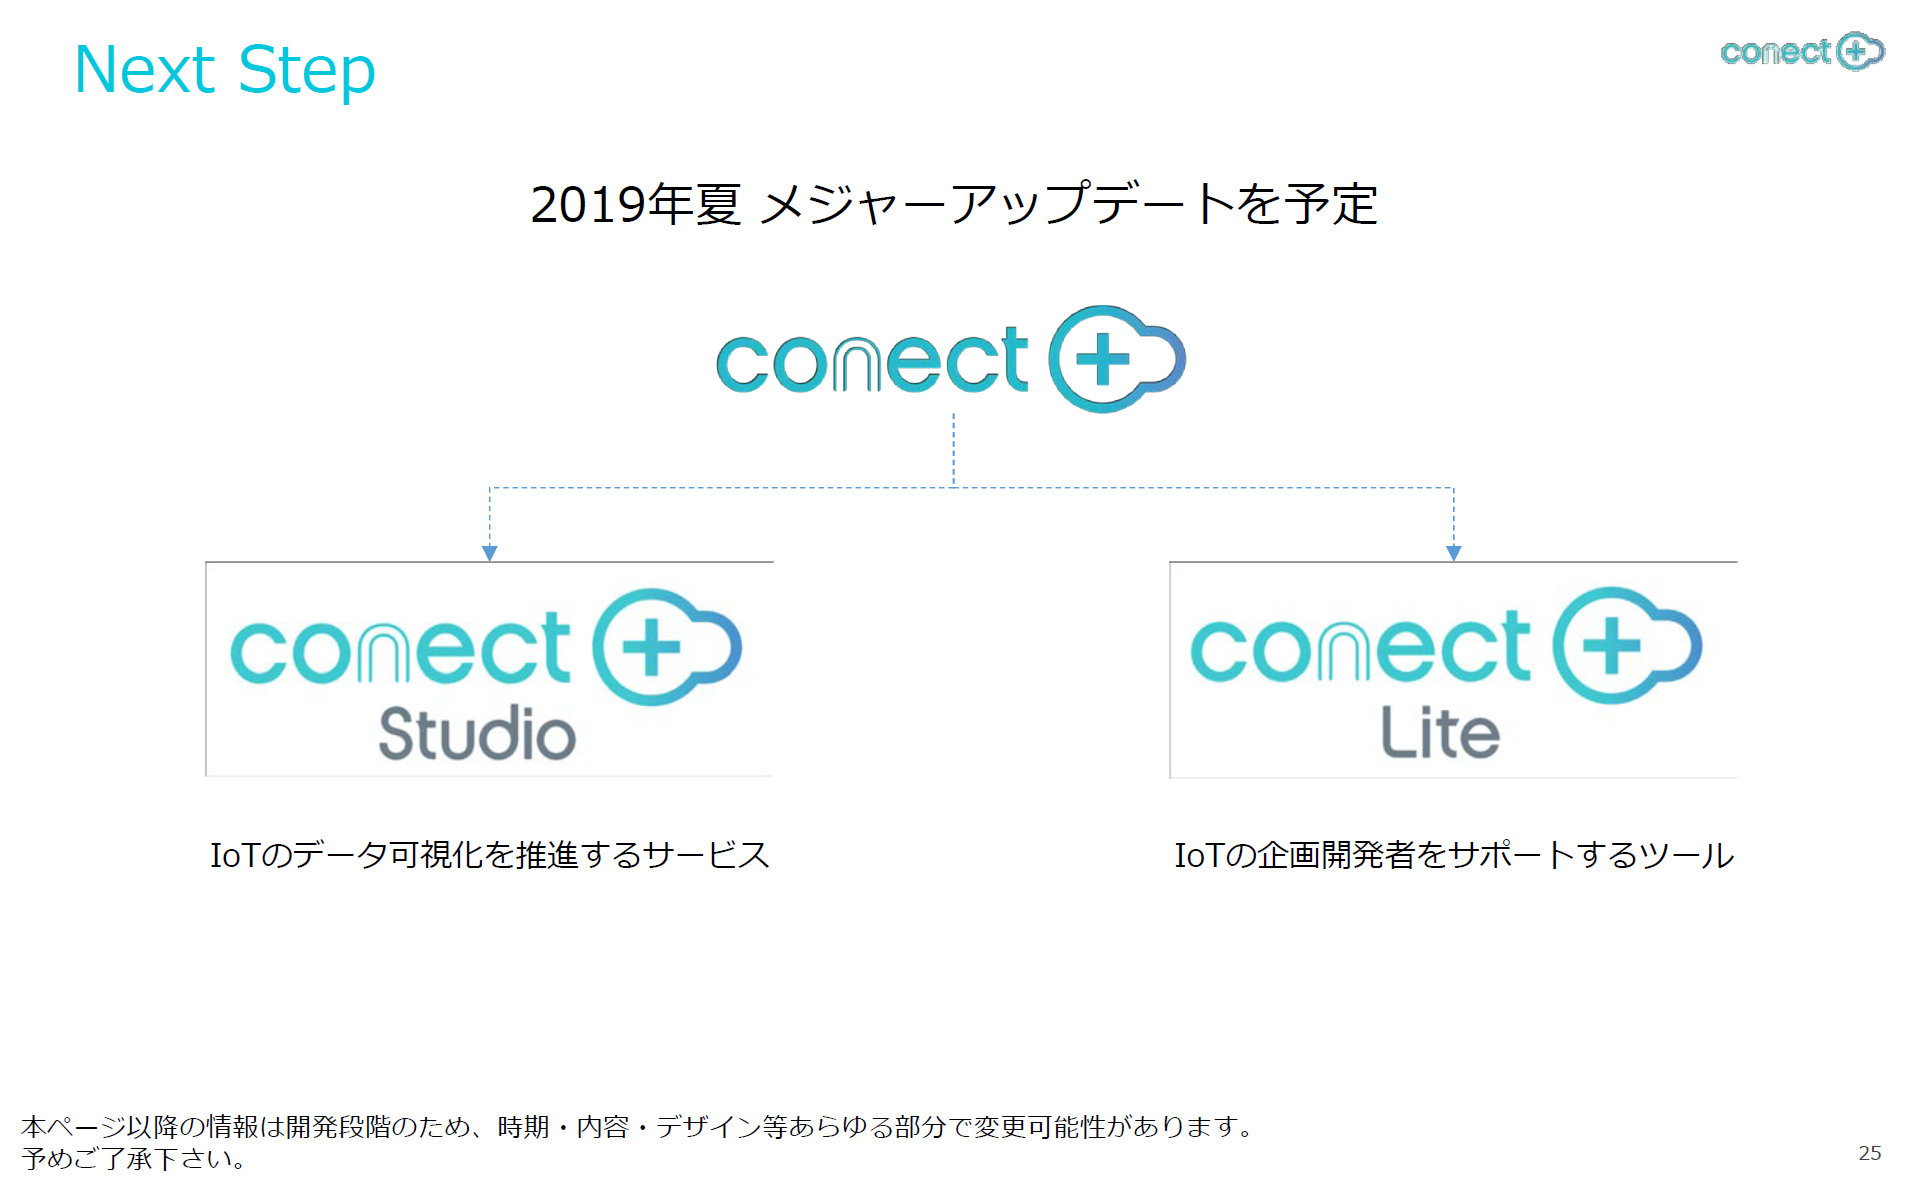  conect{ Liteconect{ StudiöʒuÂiNbNŊgj oTFconect.plus